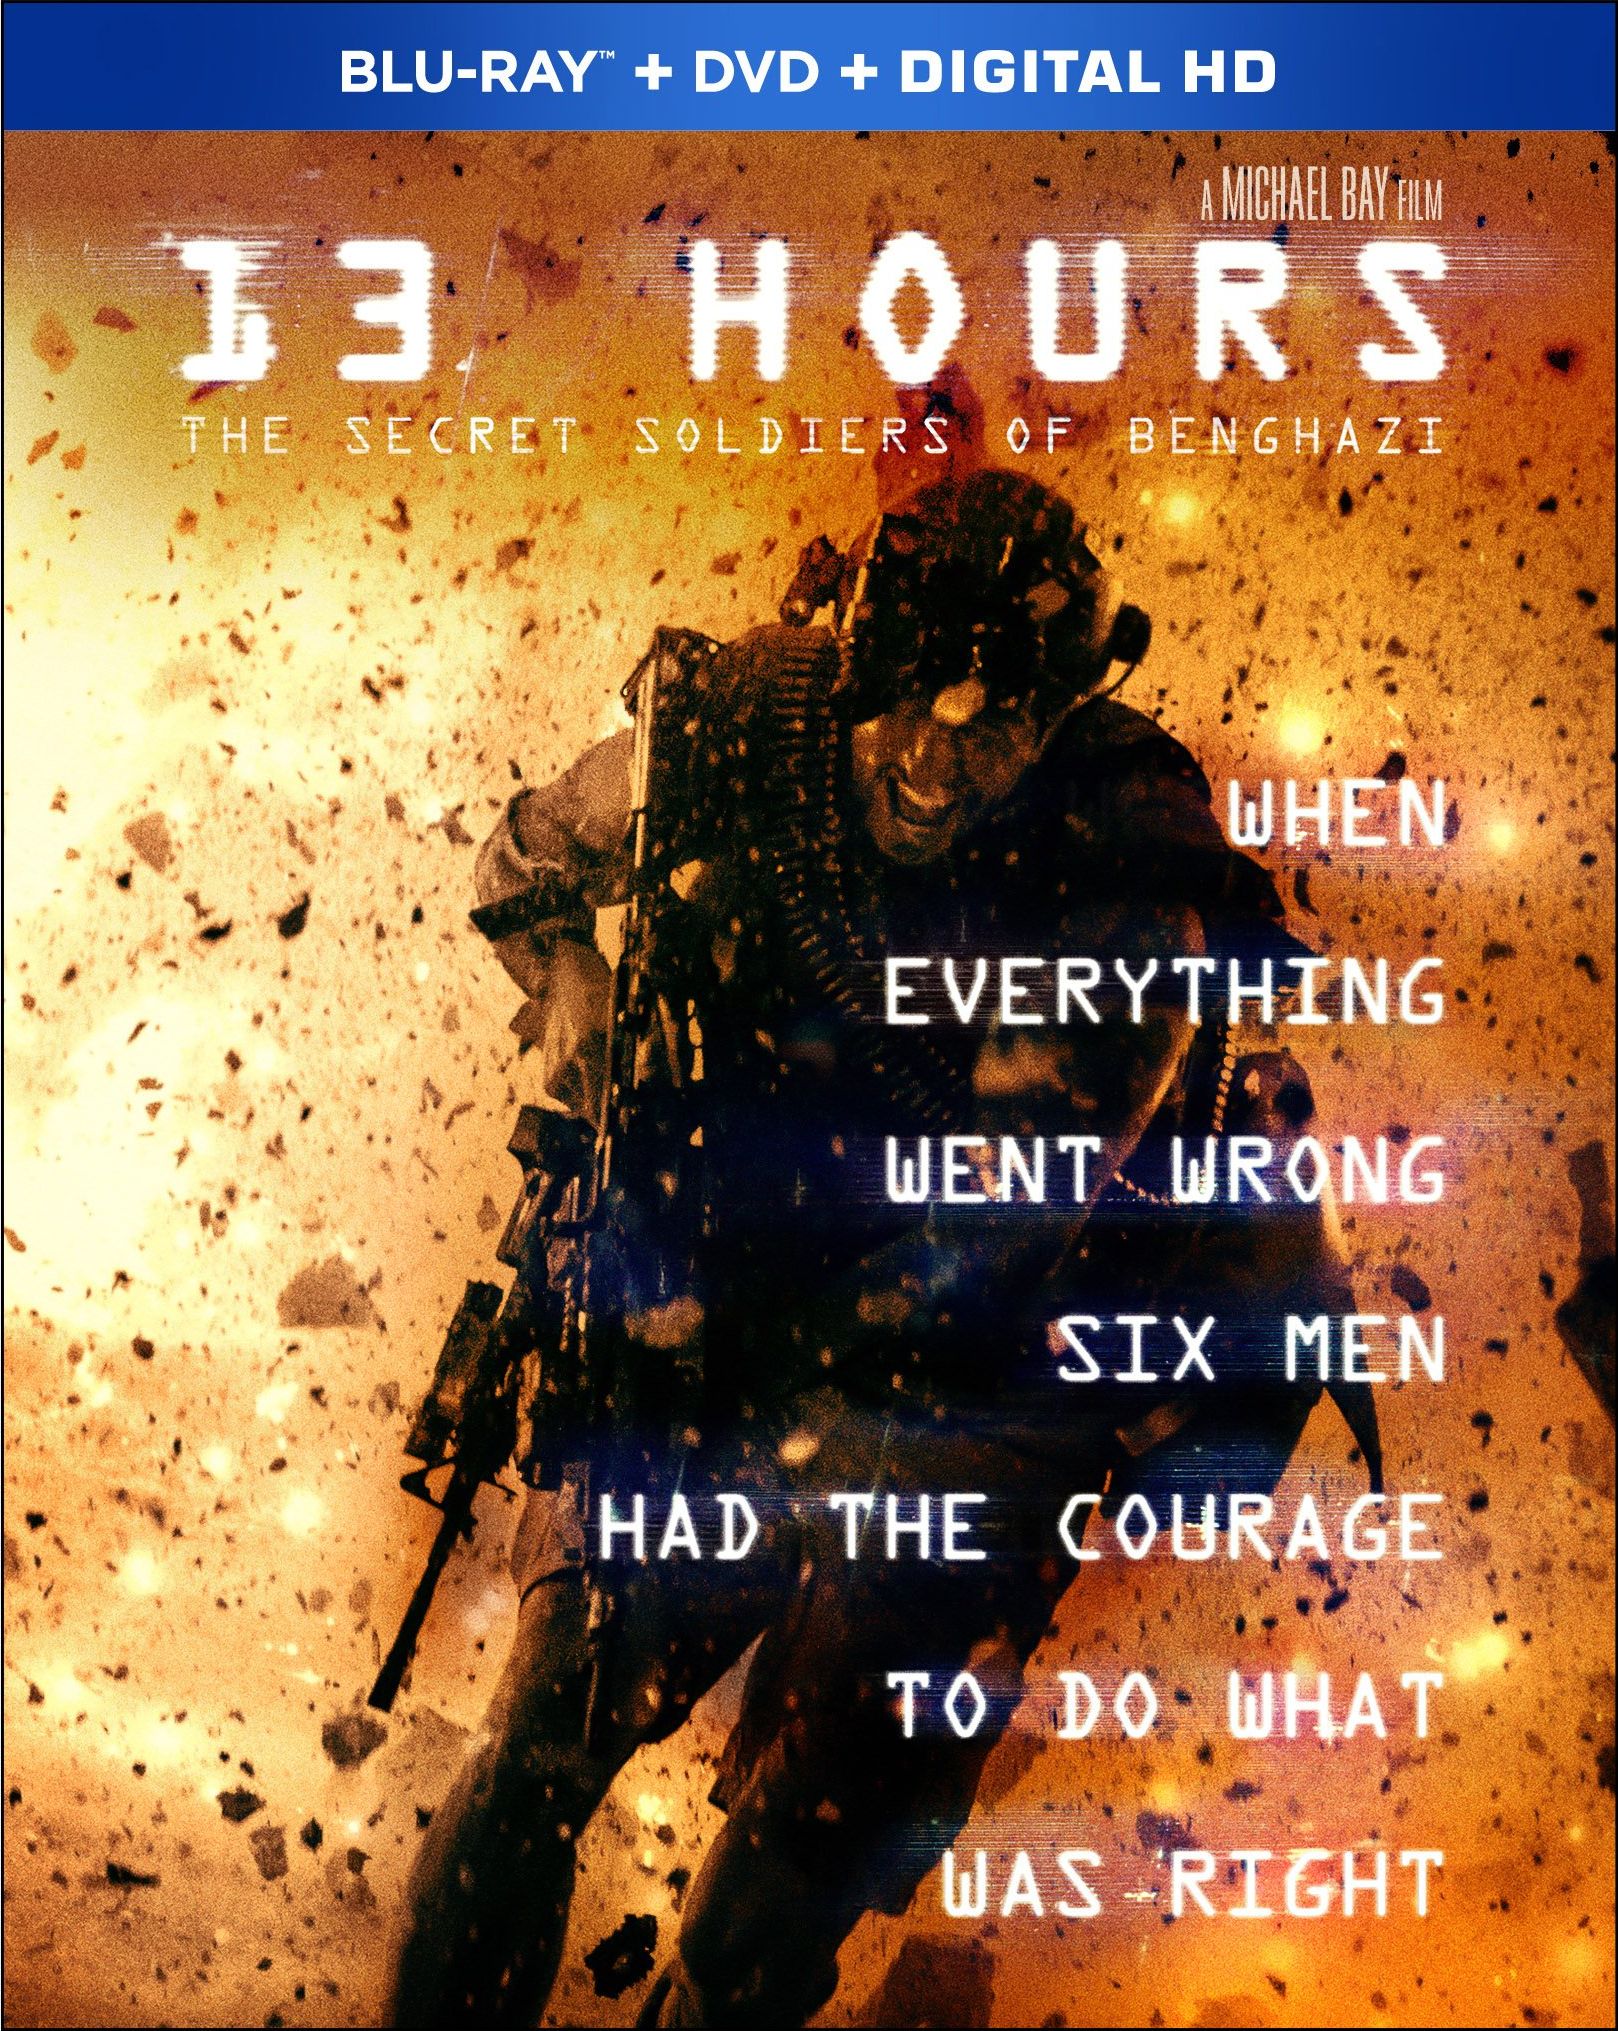 13 Hours: The Secret Soldiers of Benghazi DVD Release Date June 7, 20161618 x 2031